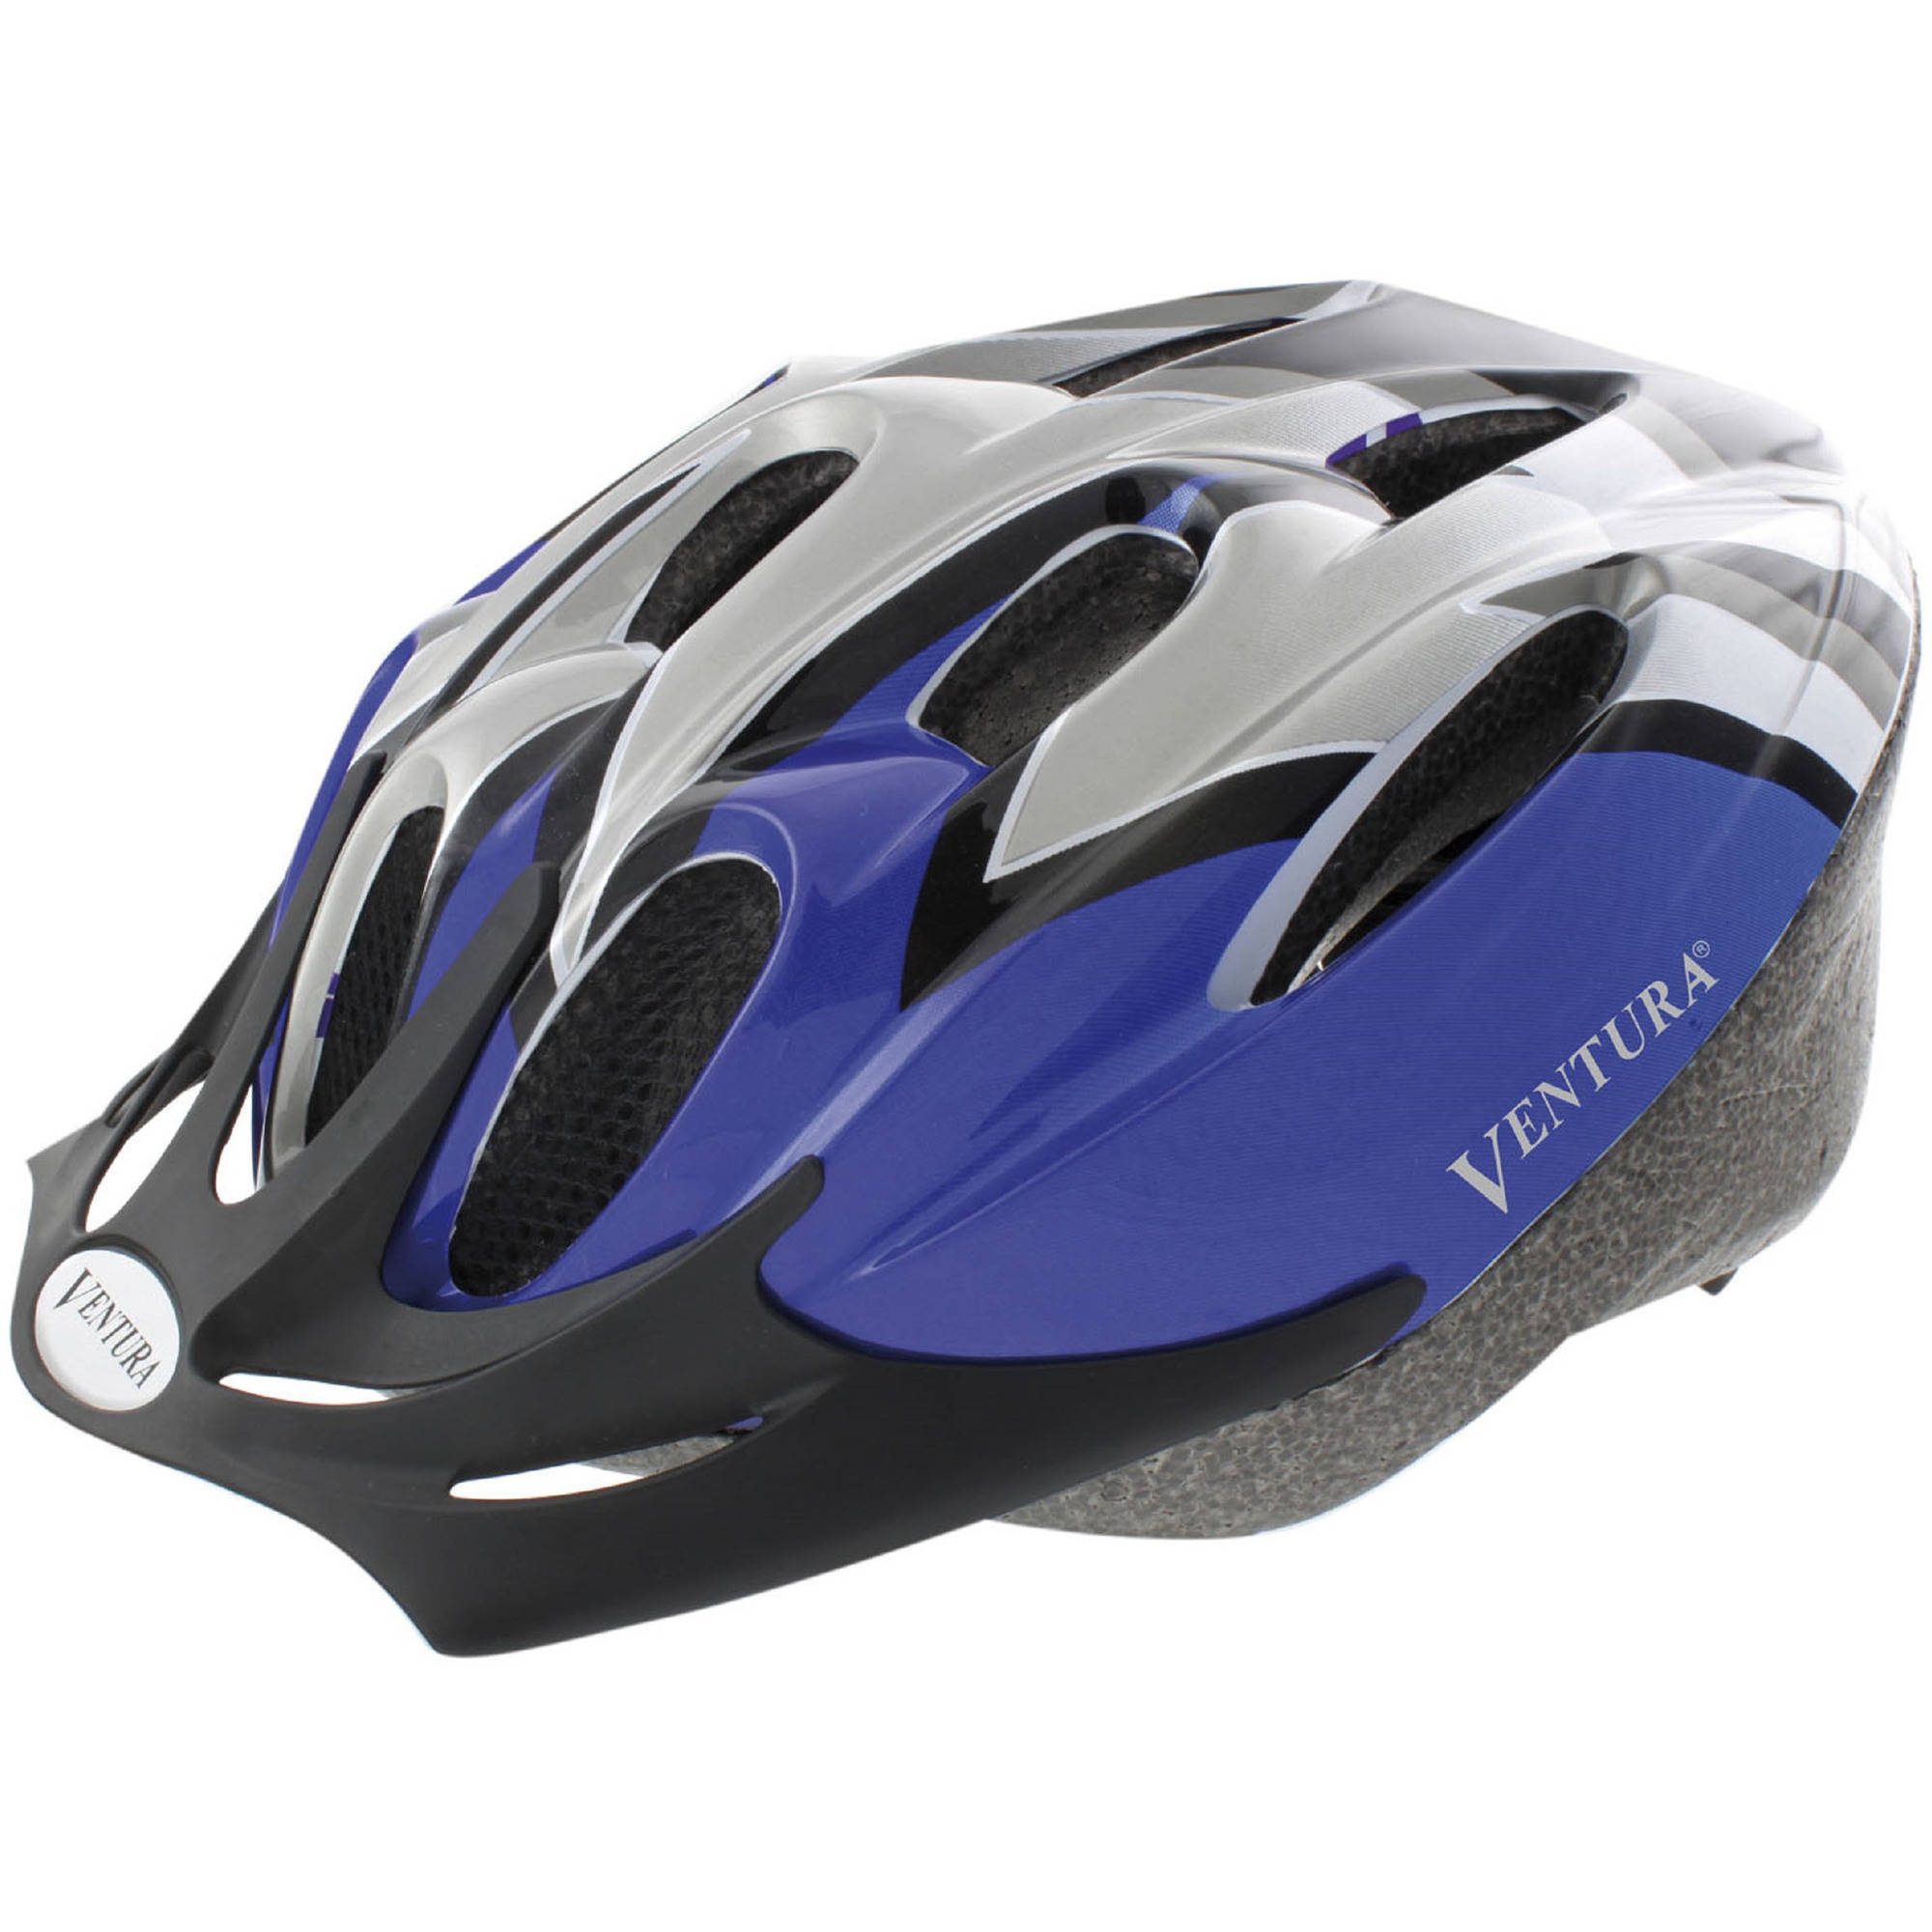 Ventura Reflective Sport Helmet L (58-61 cm) - image 1 of 4